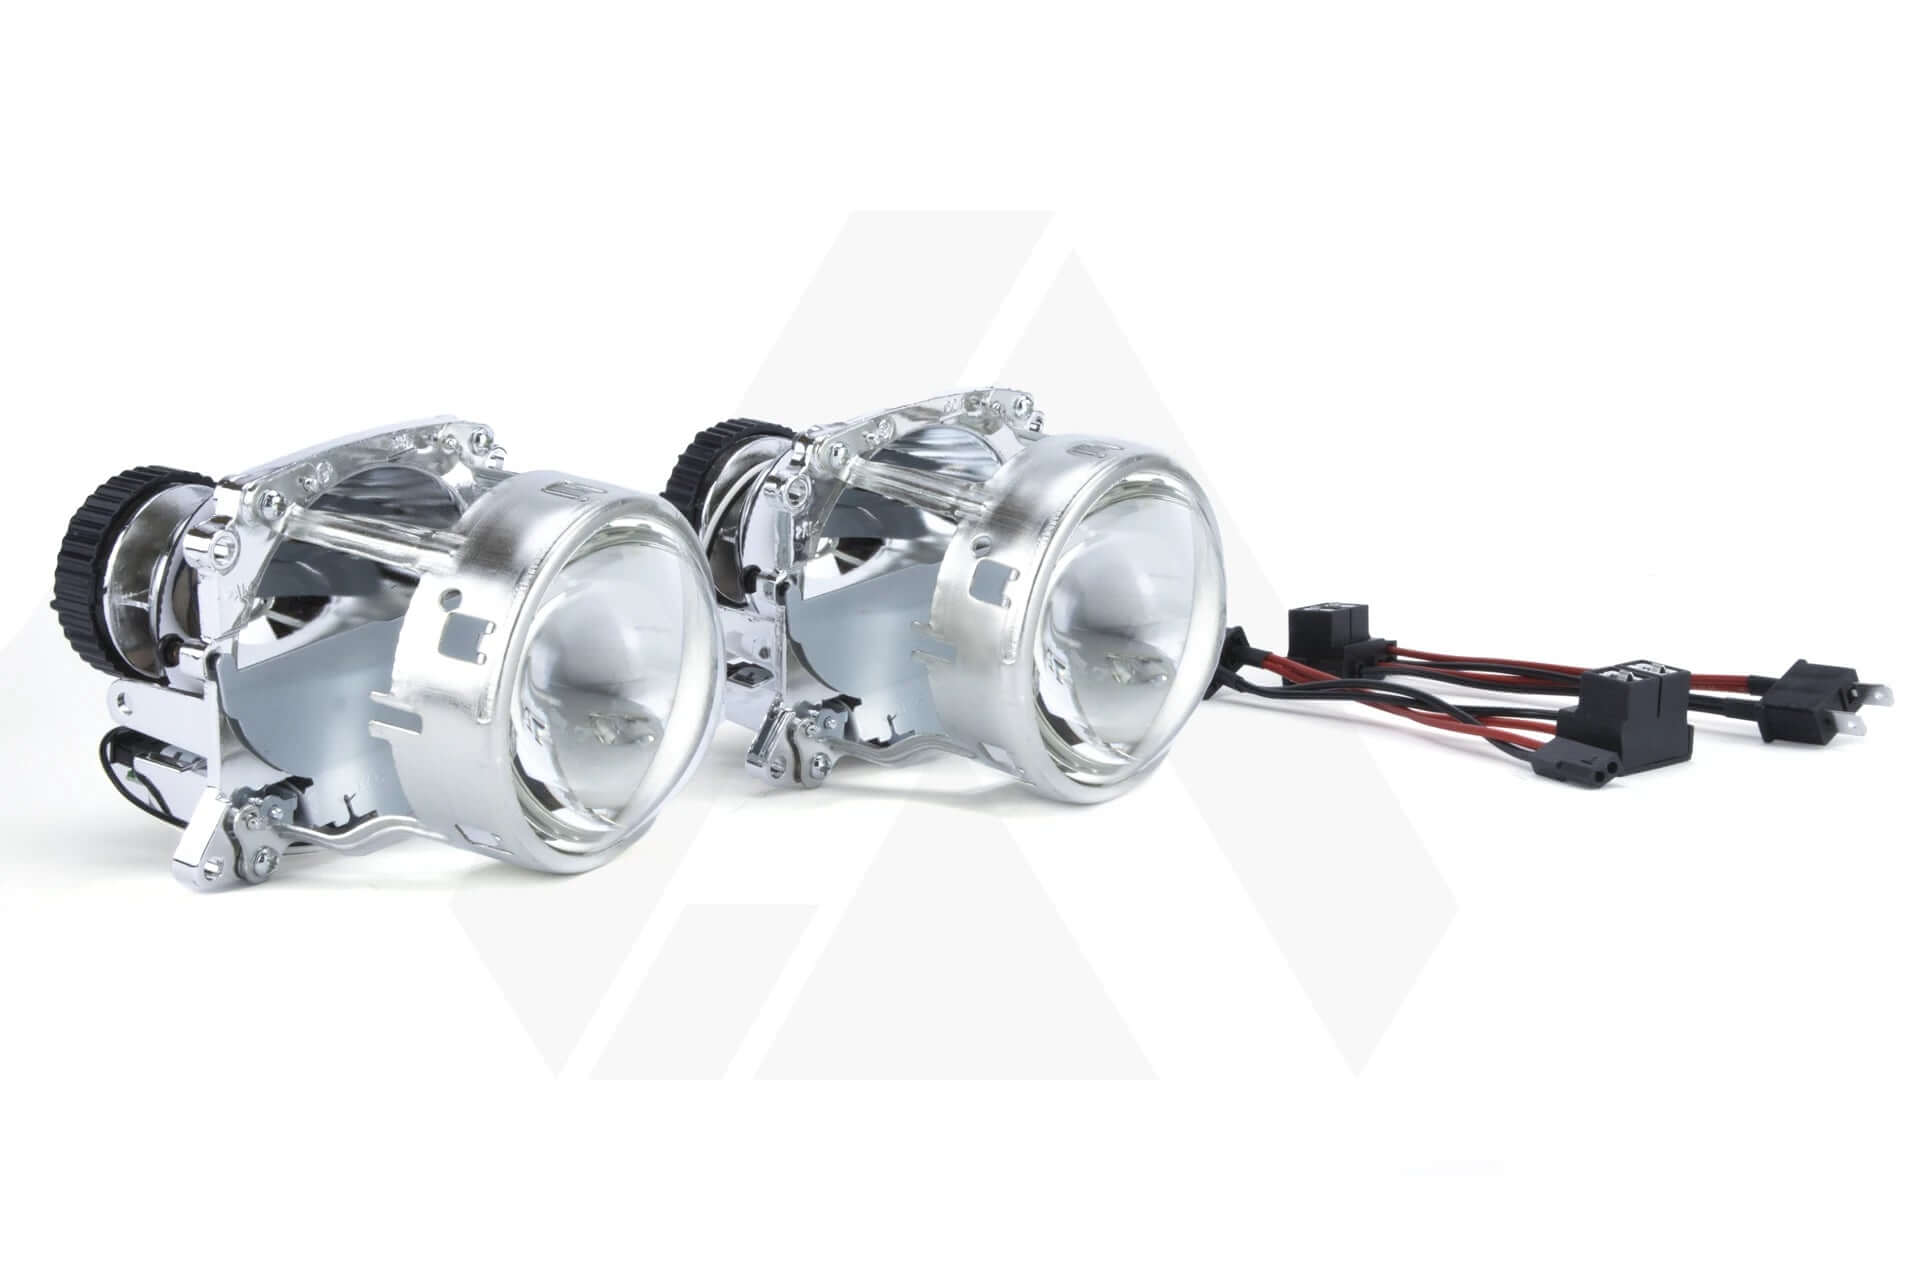 Land Rover Range Rover 02-12 bi-xenon headlight repair & upgrade kit for xenon HID headlights made by Bosch/AL